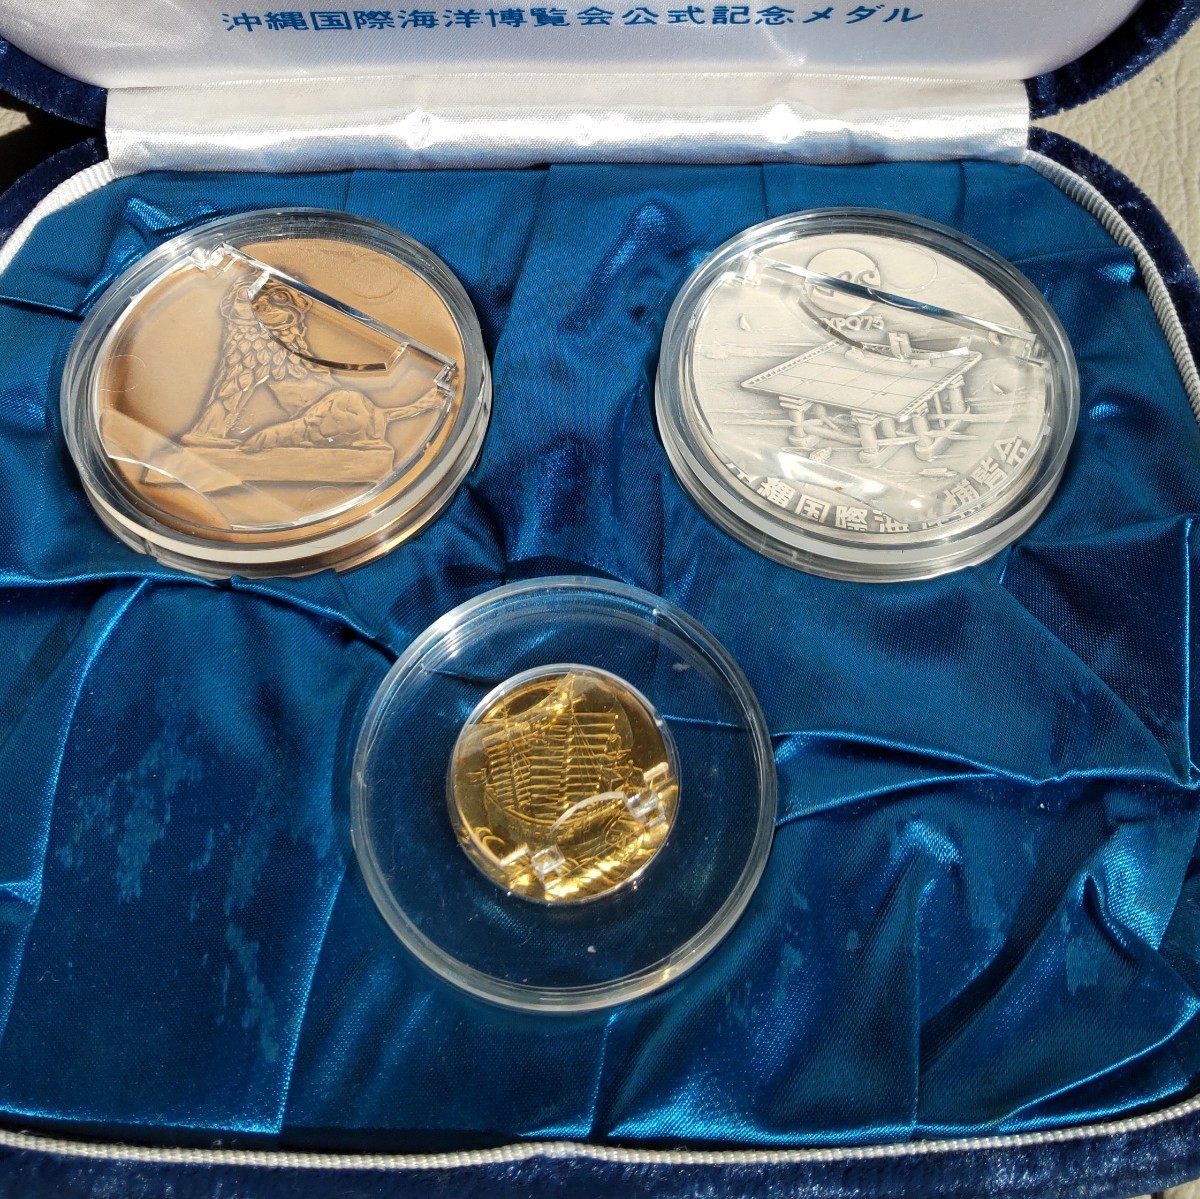 金 銀 銅 セット EXPO75 沖縄 国際海洋博覧会 公式 記念メダル 18金